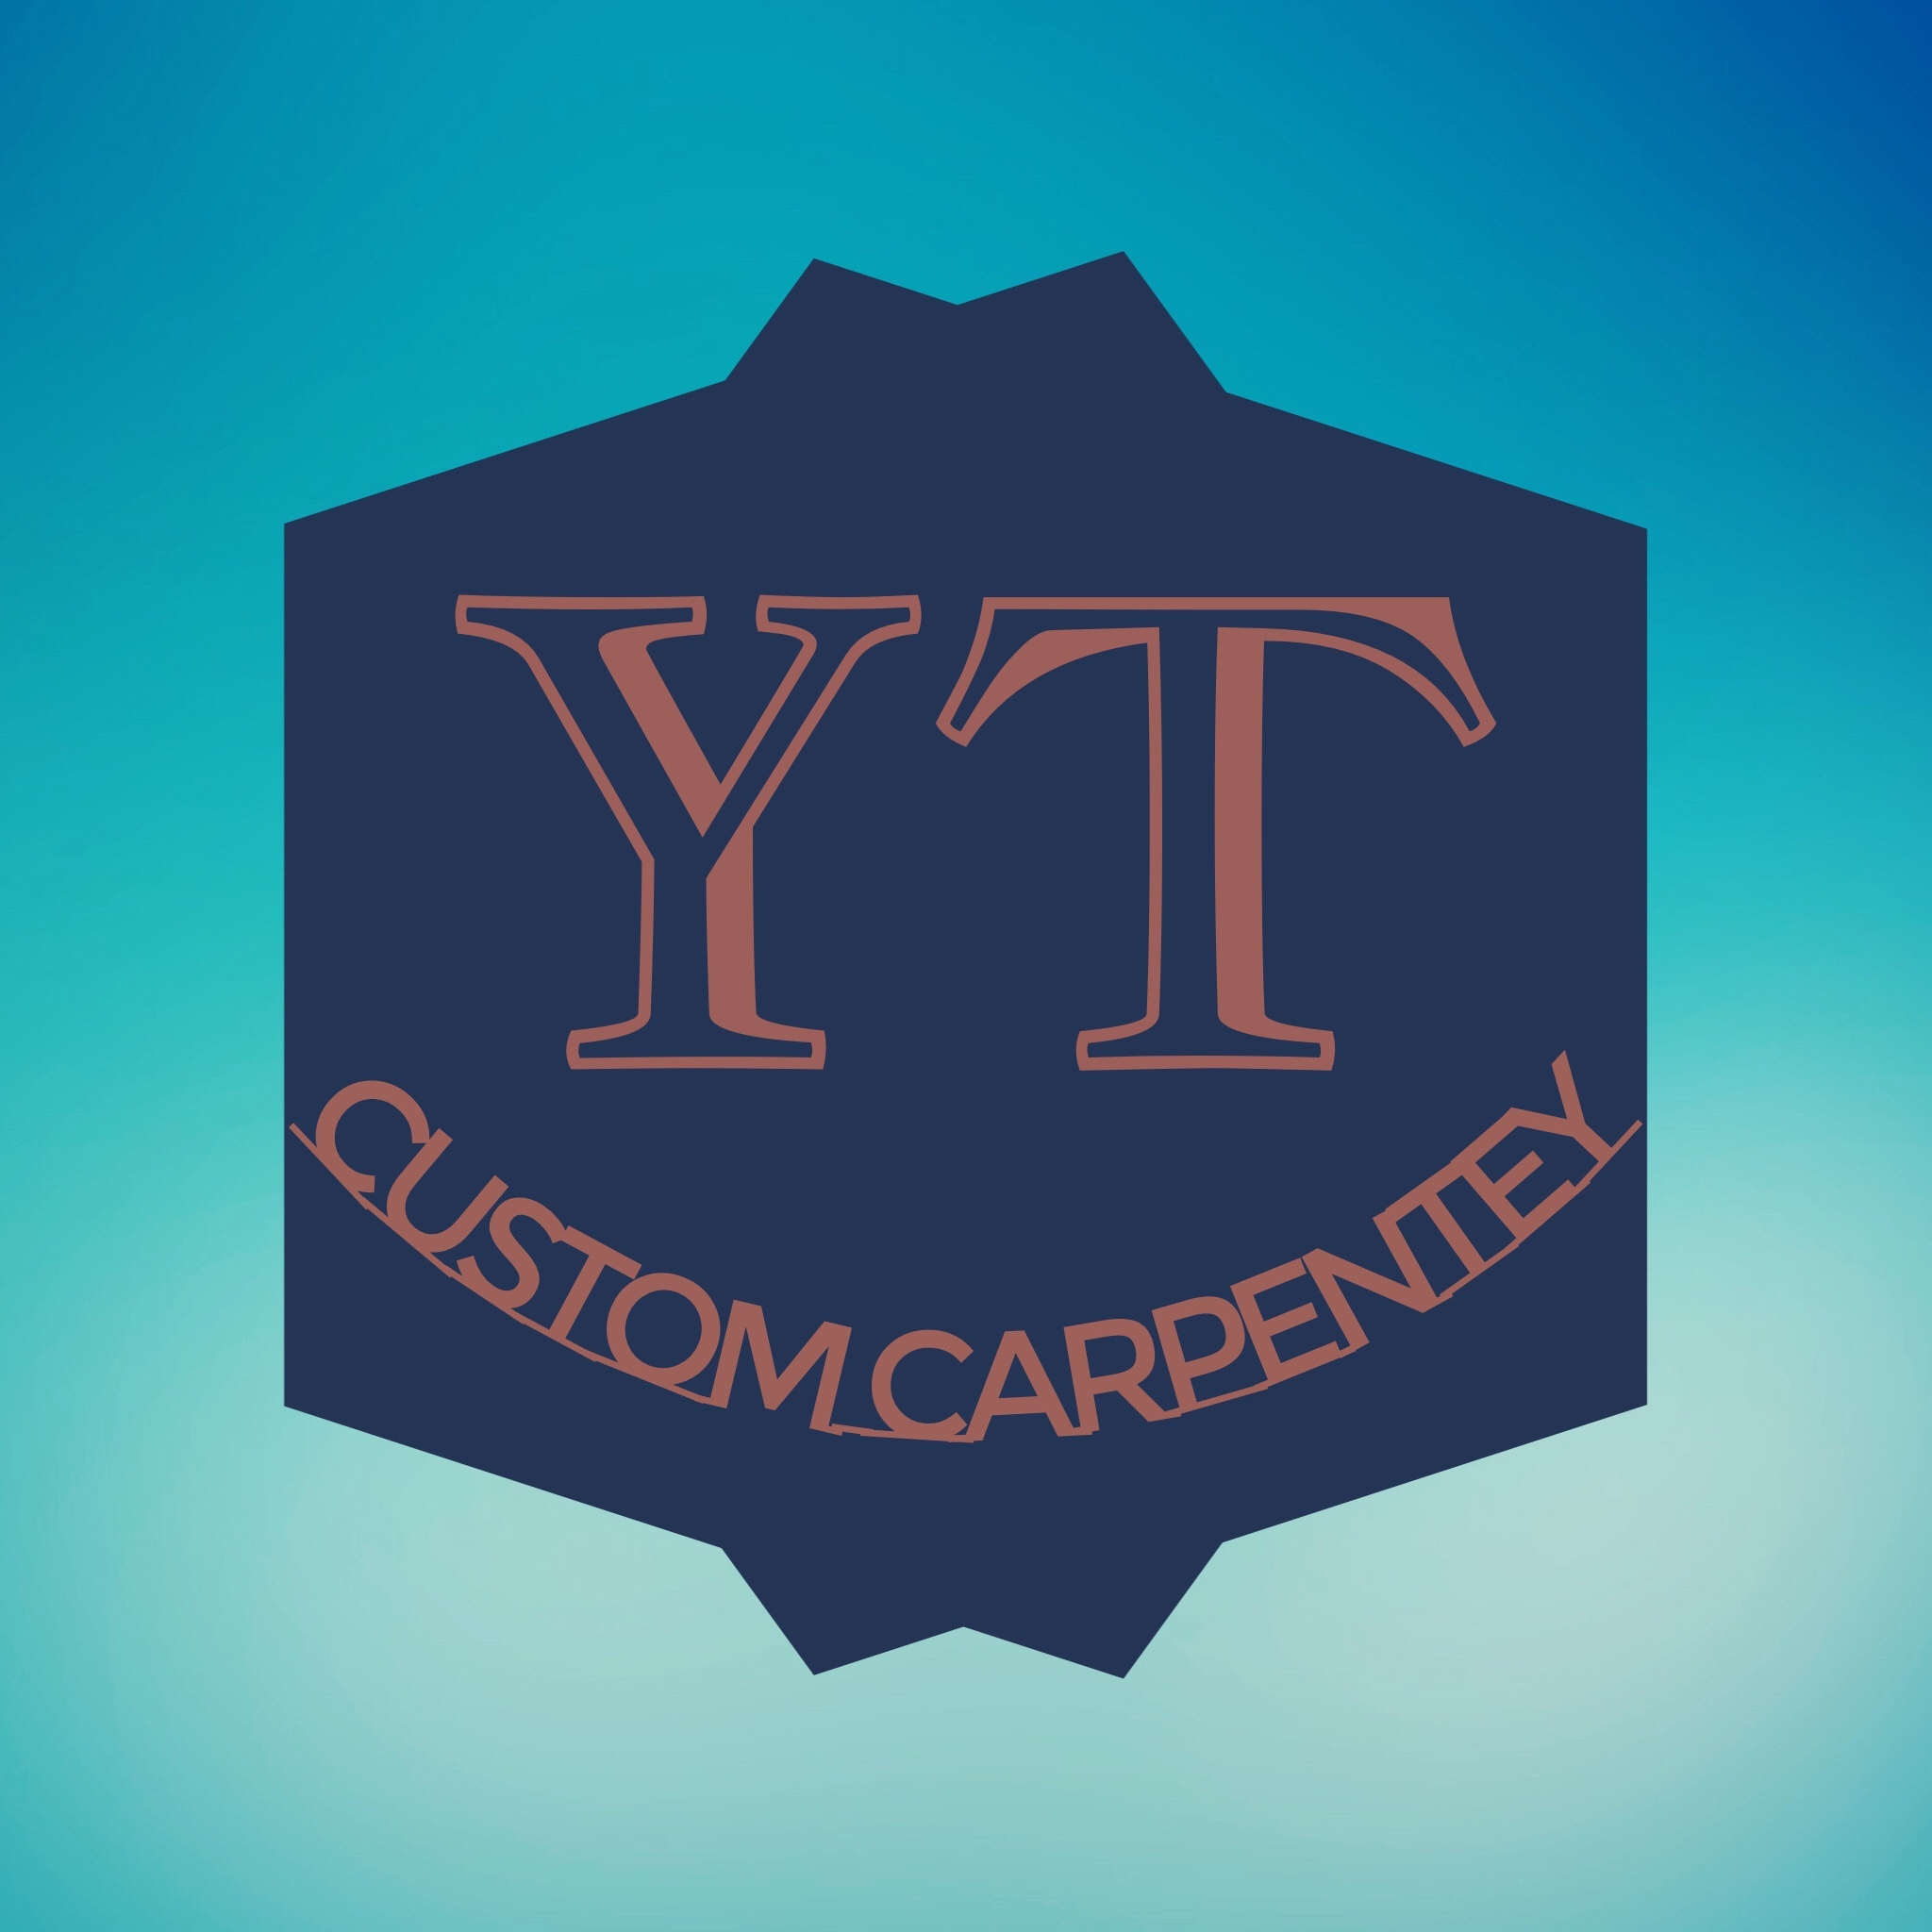 Yung T Custom Carpentry's logo